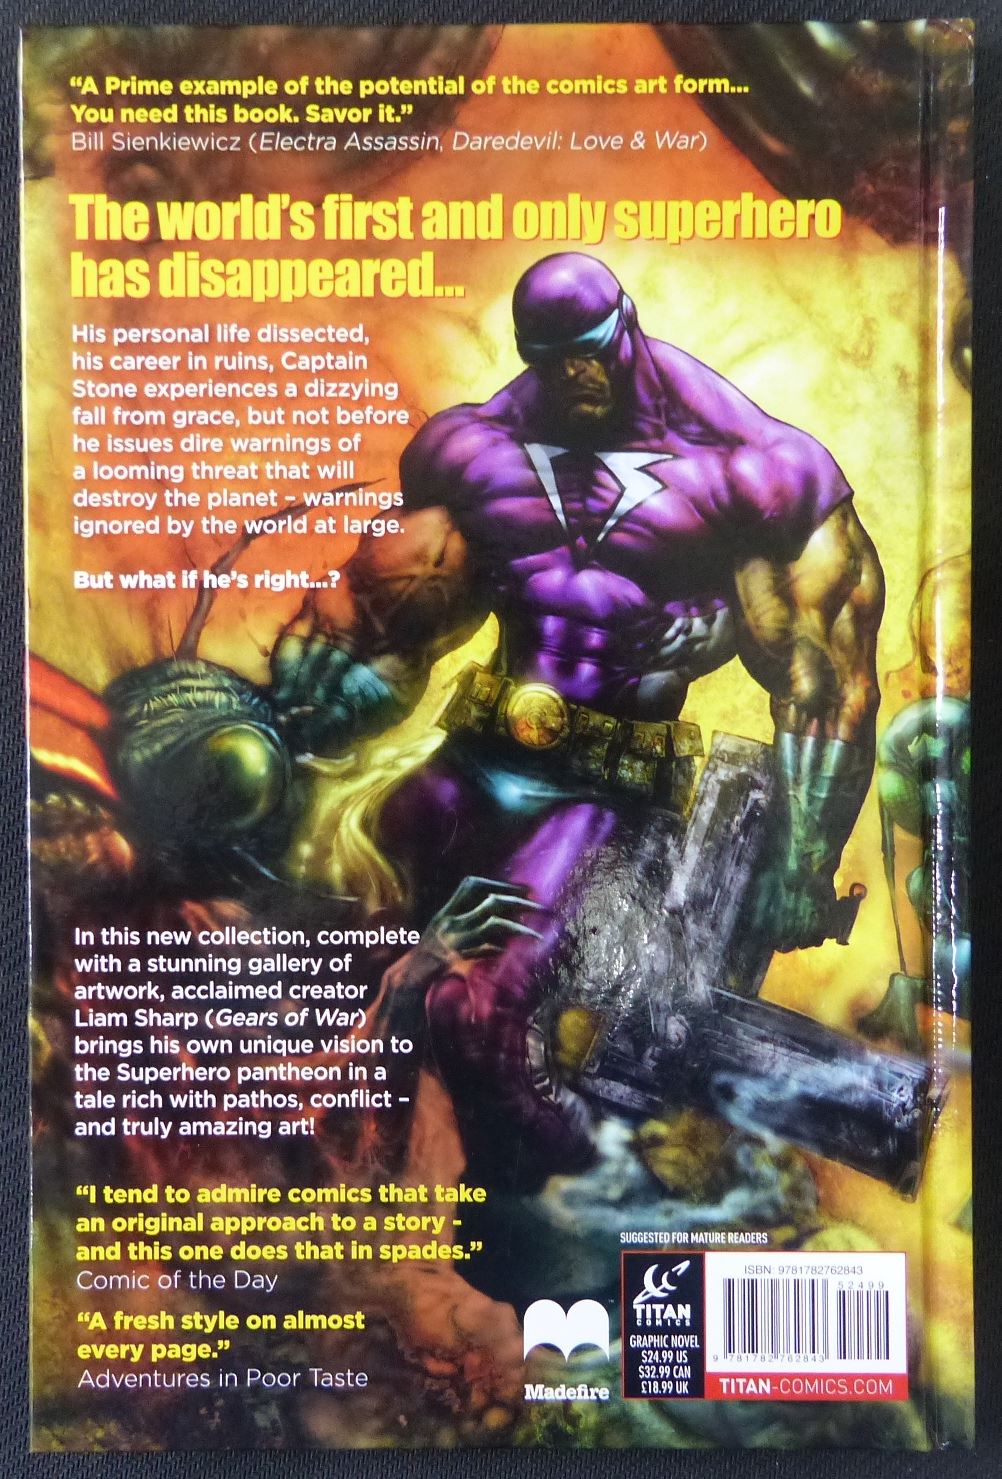 Cap Stone: Captain Stone is Missing - Hardback - Titan Graphic Novel #29R